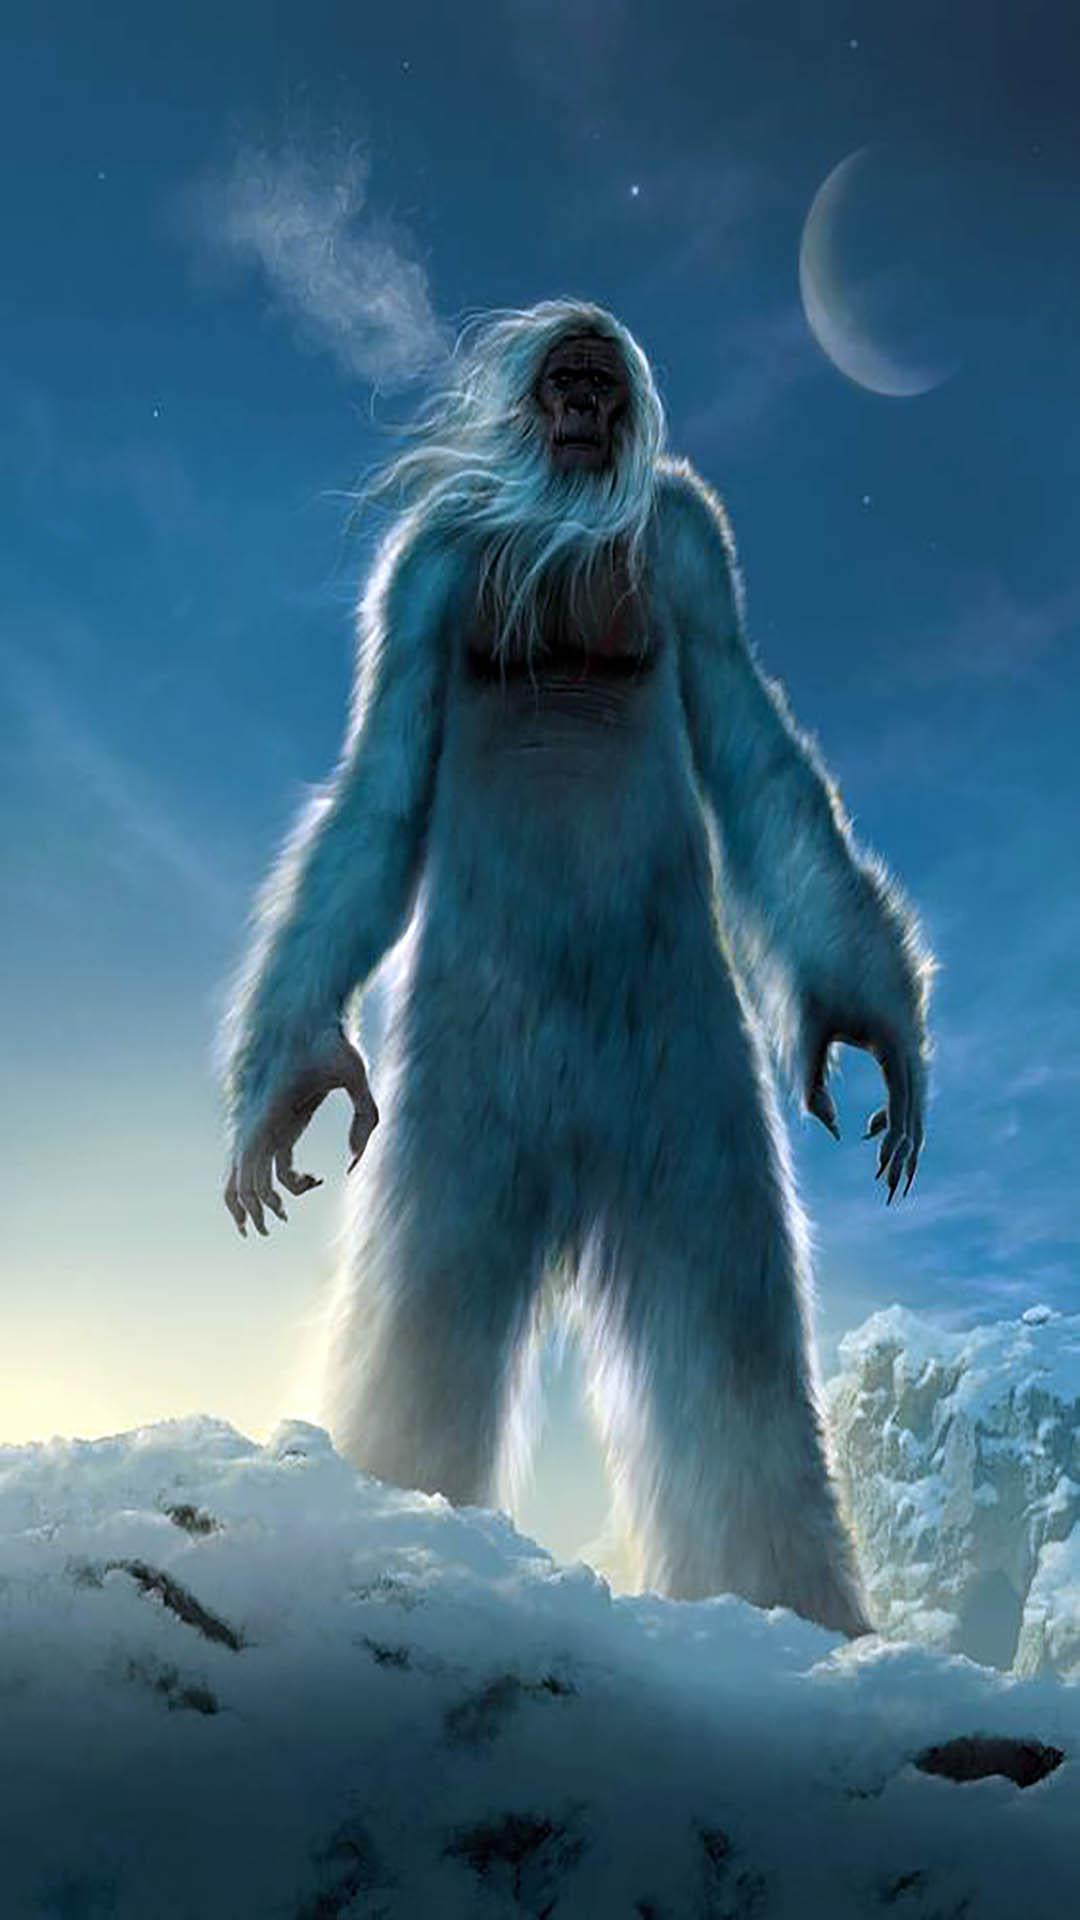 Bigfoot Monster - Yeti Hunter for apple download free